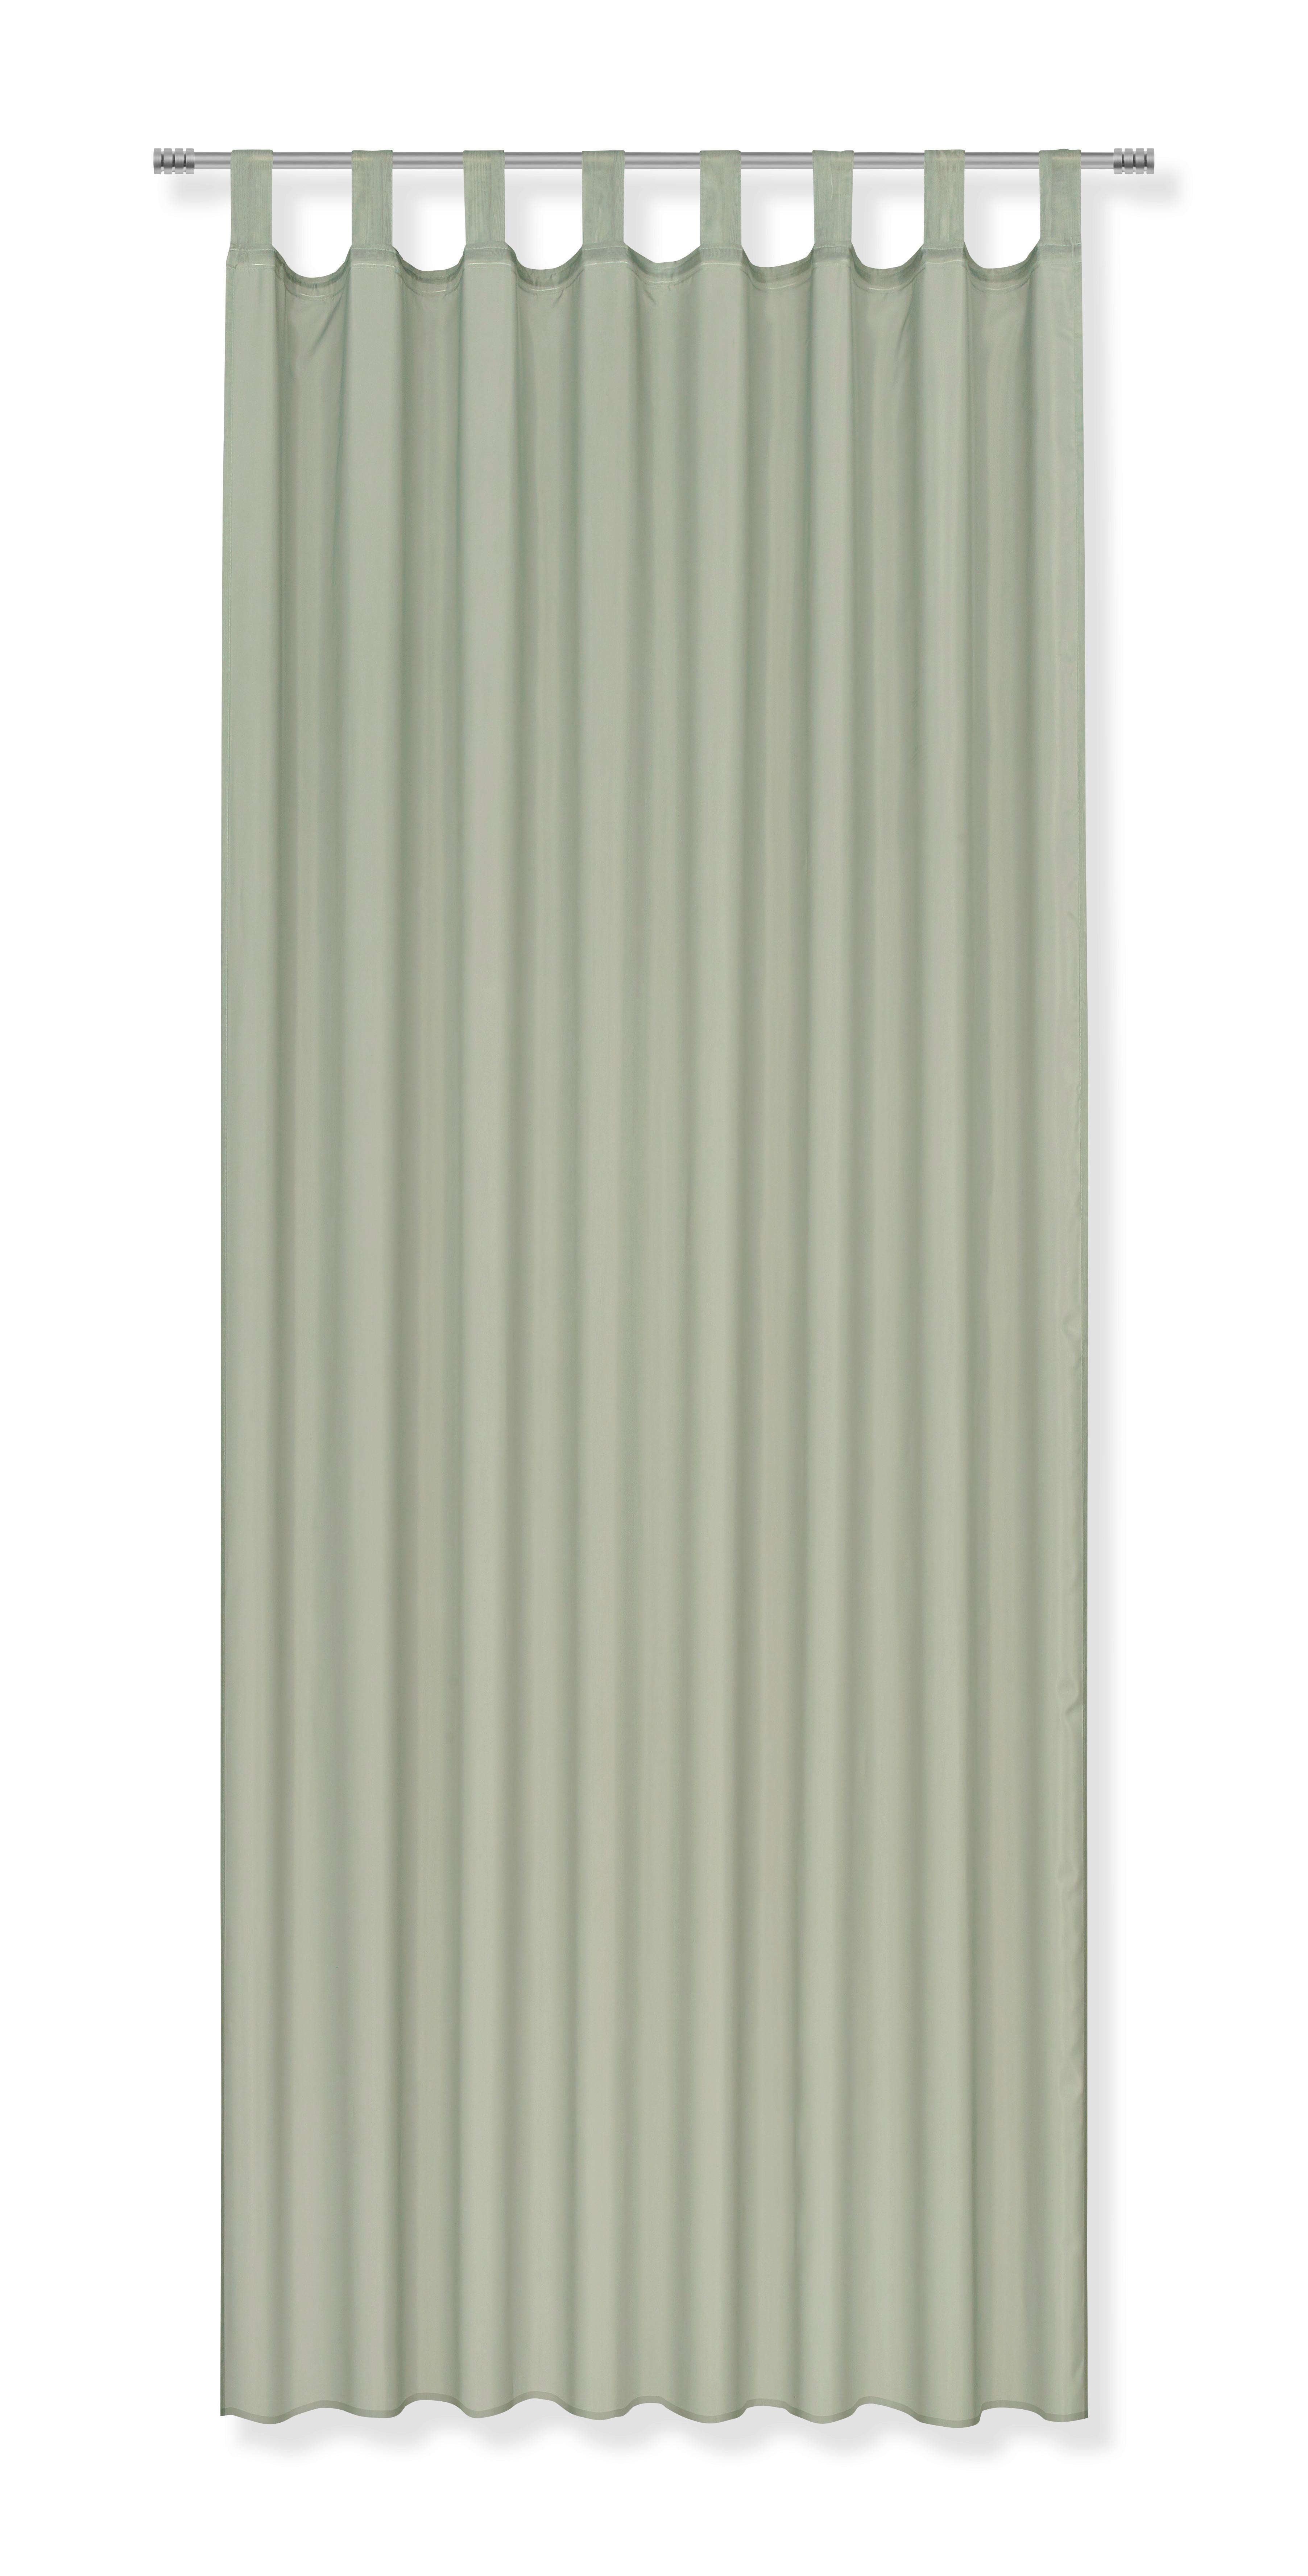 Záves S Pútkami Hanna 2ks/bal.,140/245cm - zelená, textil (140/245cm) - Based